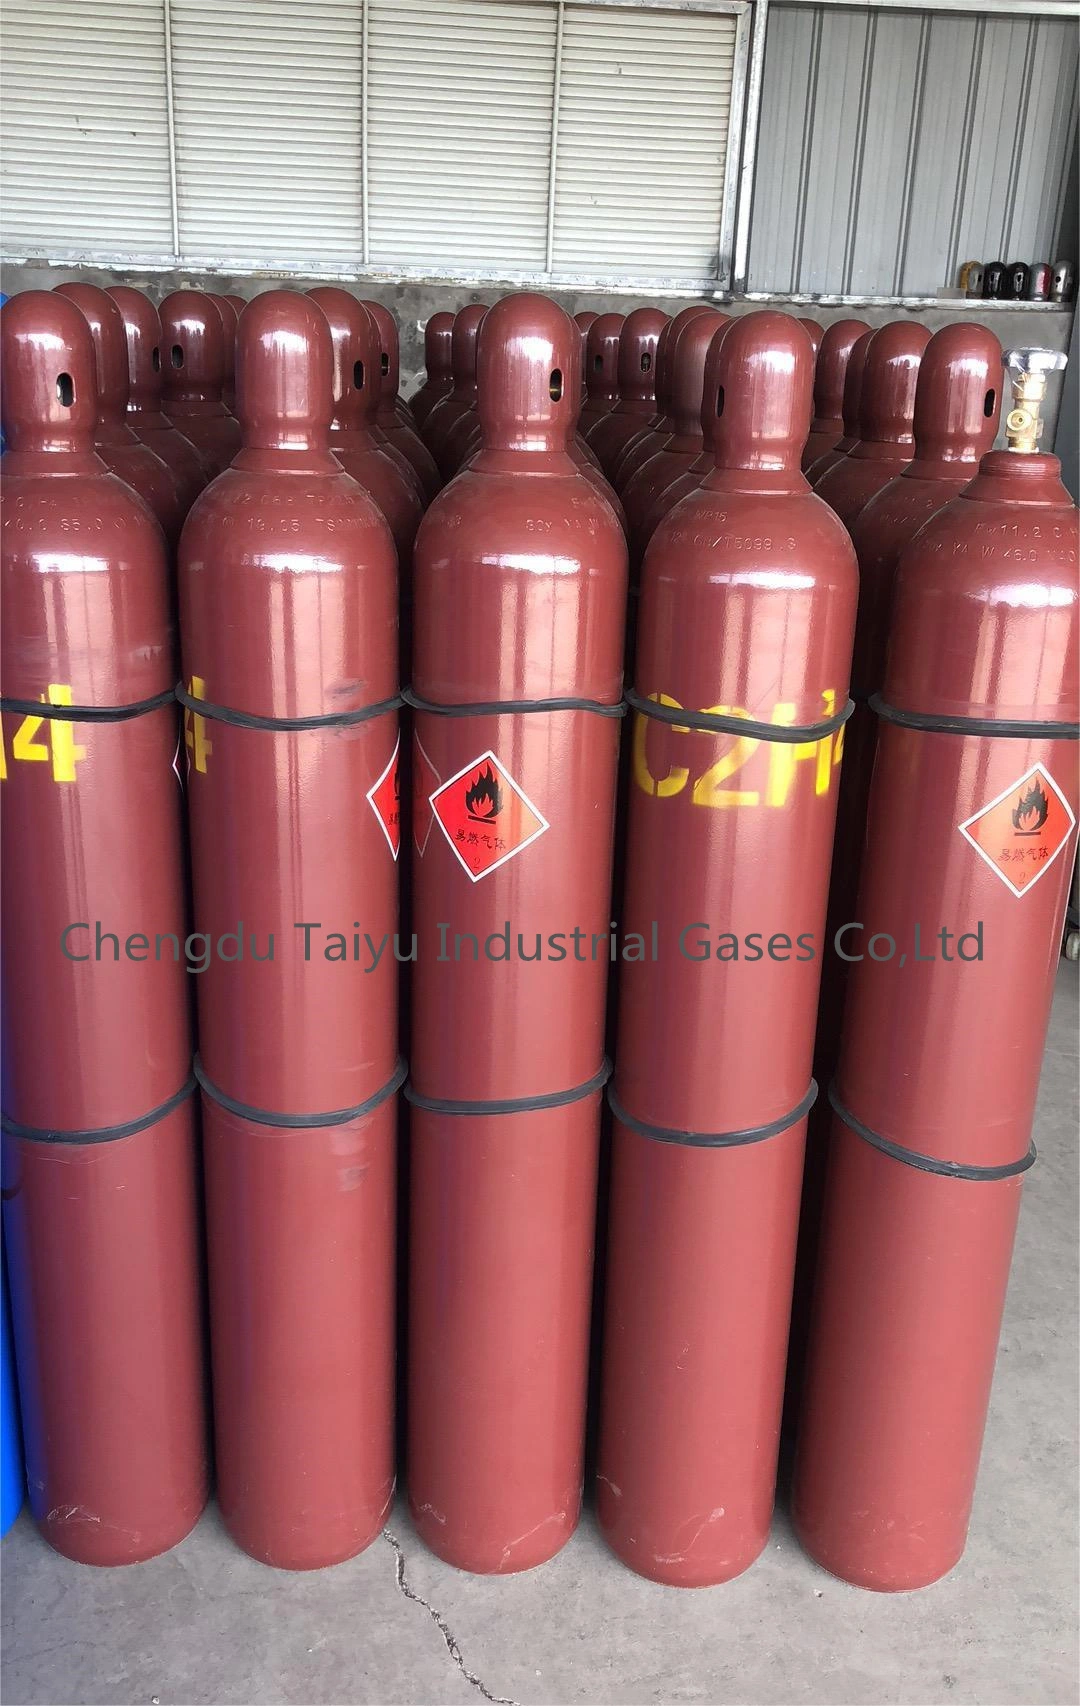 40L Cylinder Industrial Grade 99.95% C2h4 Ethylene Gas